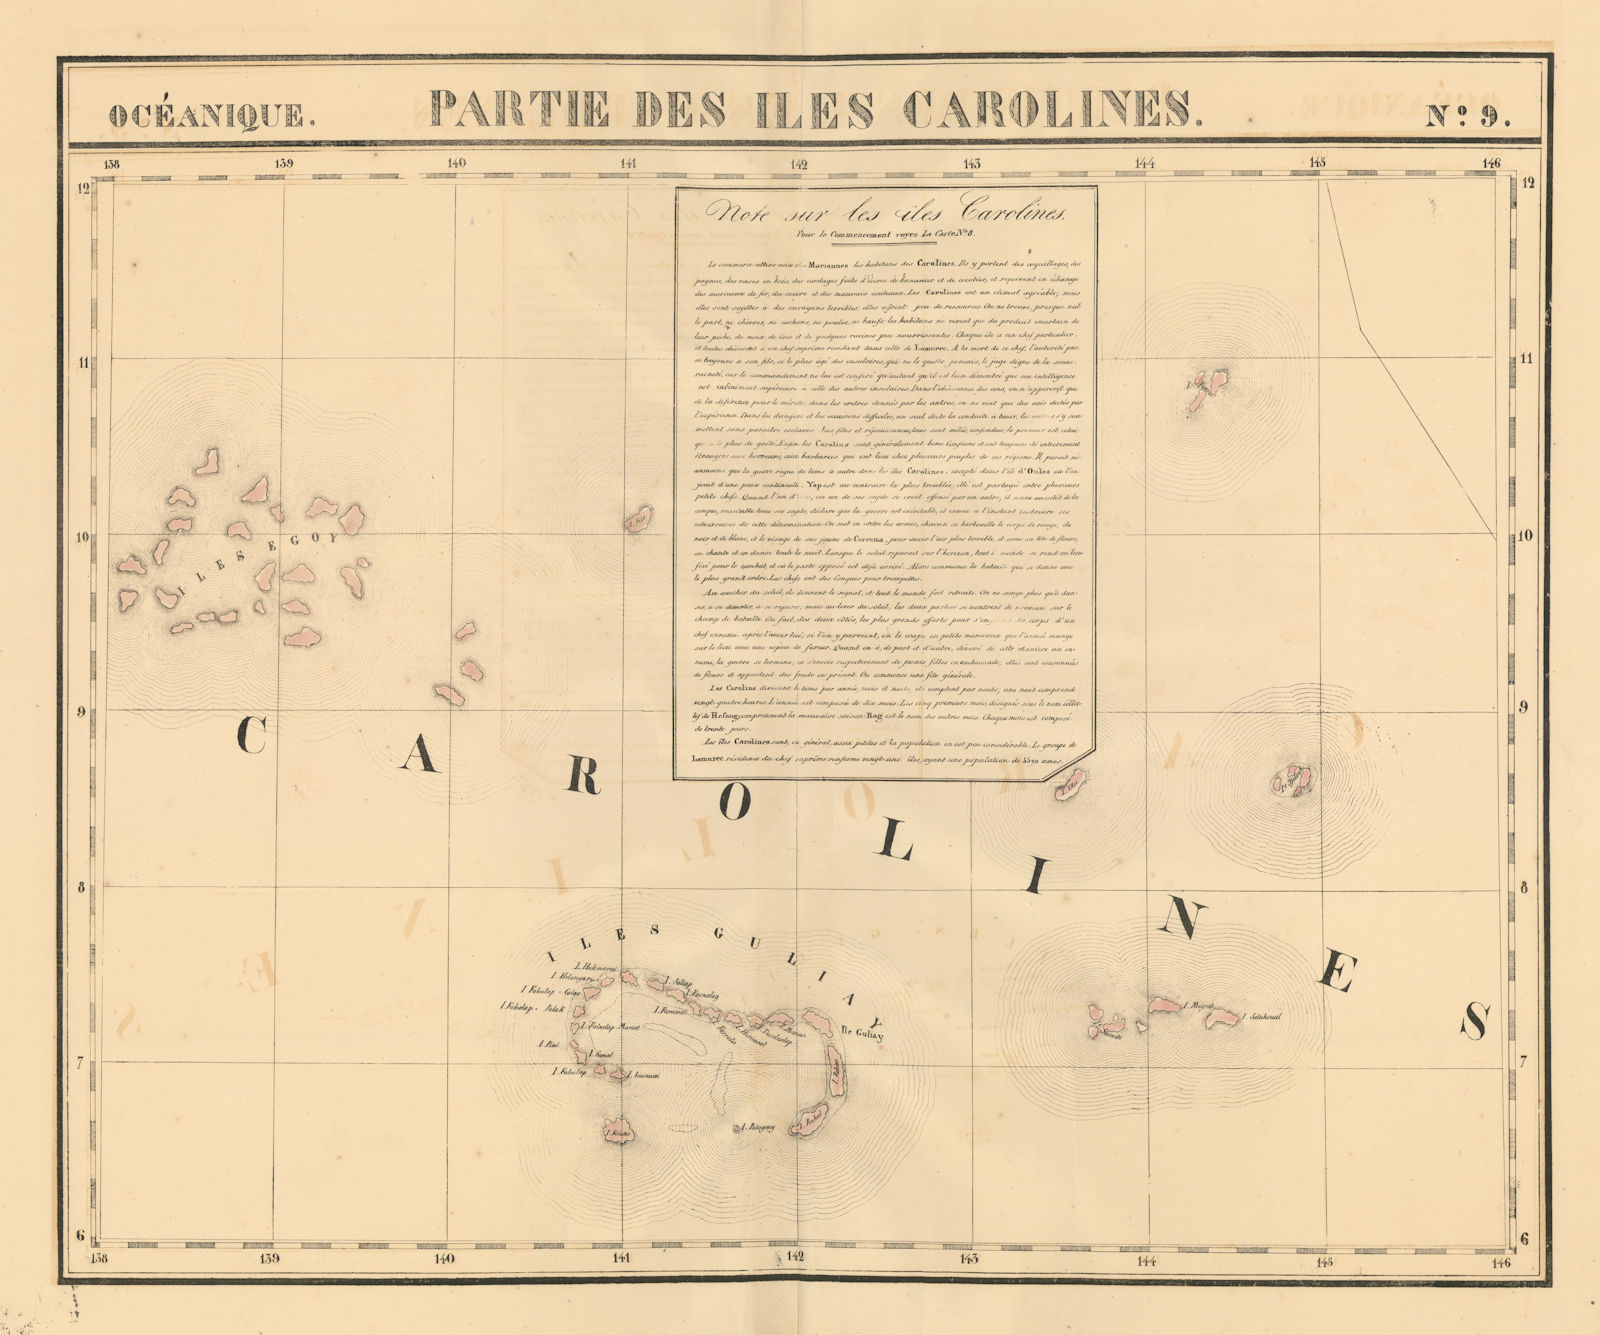 Océanique. Partie des Iles Carolines #9. Yap Micronesia. VANDERMAELEN 1827 map